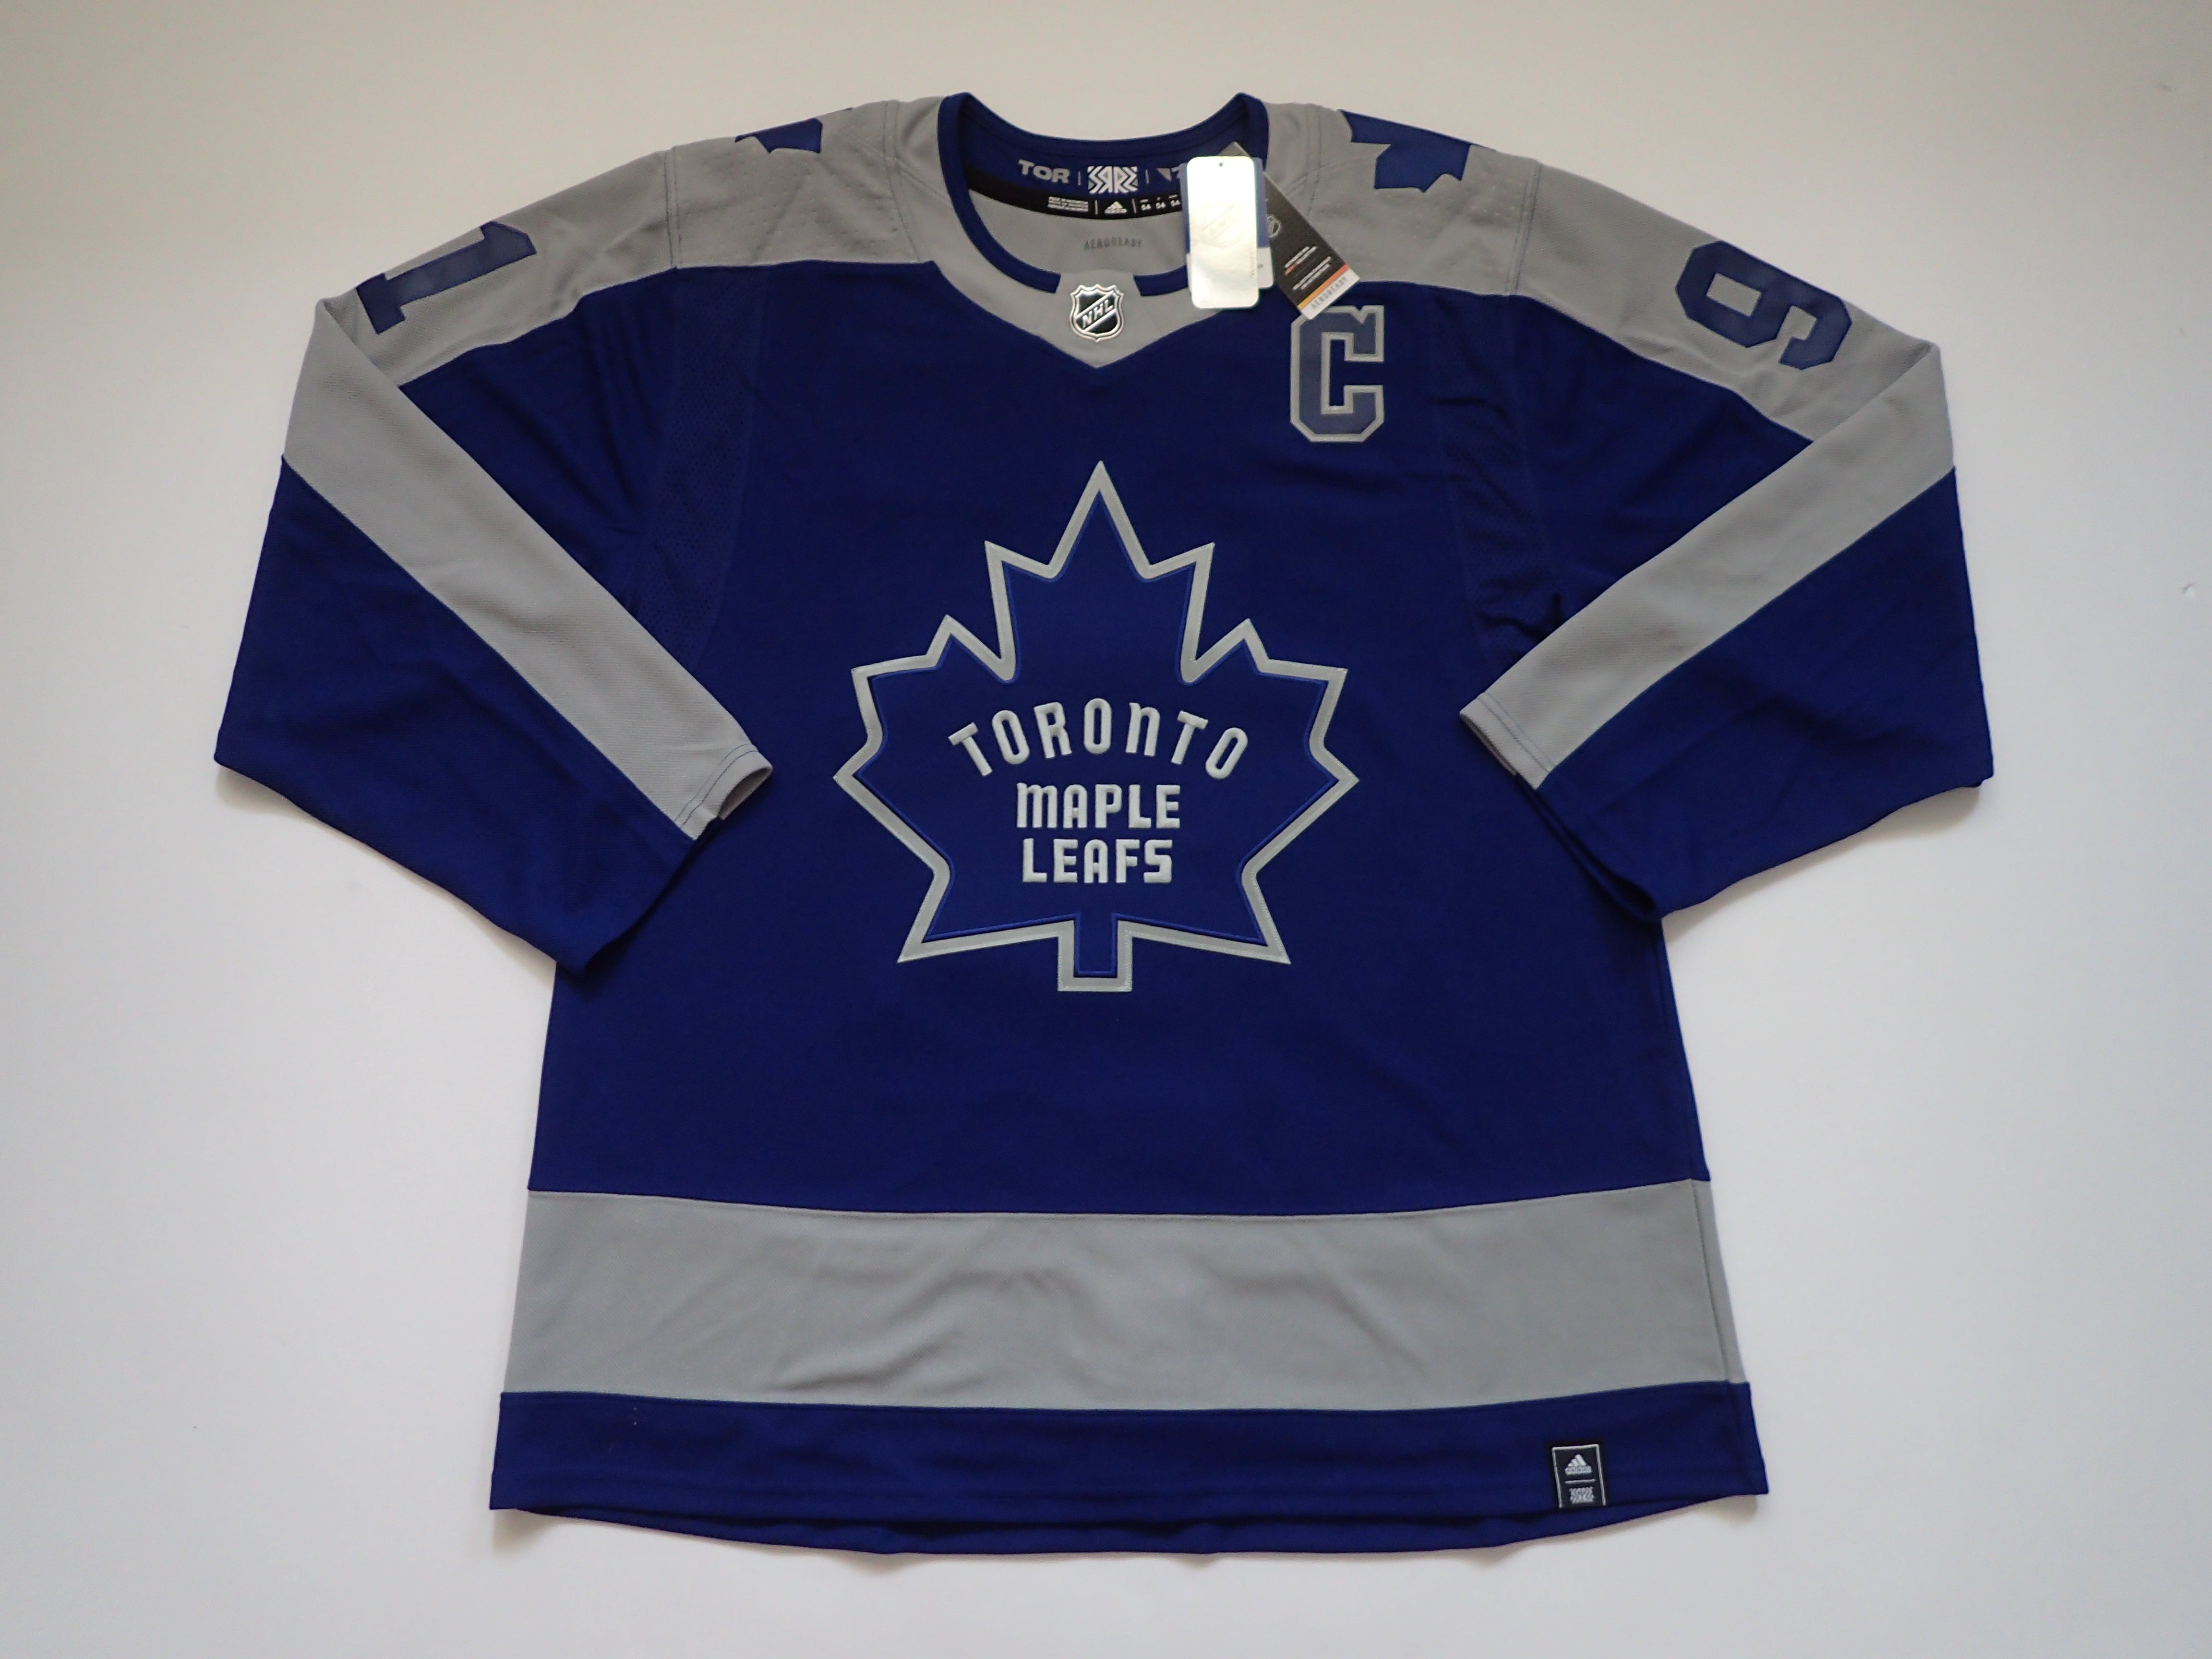 WARMINGTON: Marner's jersey sees top bid so far in ALS sweater auction